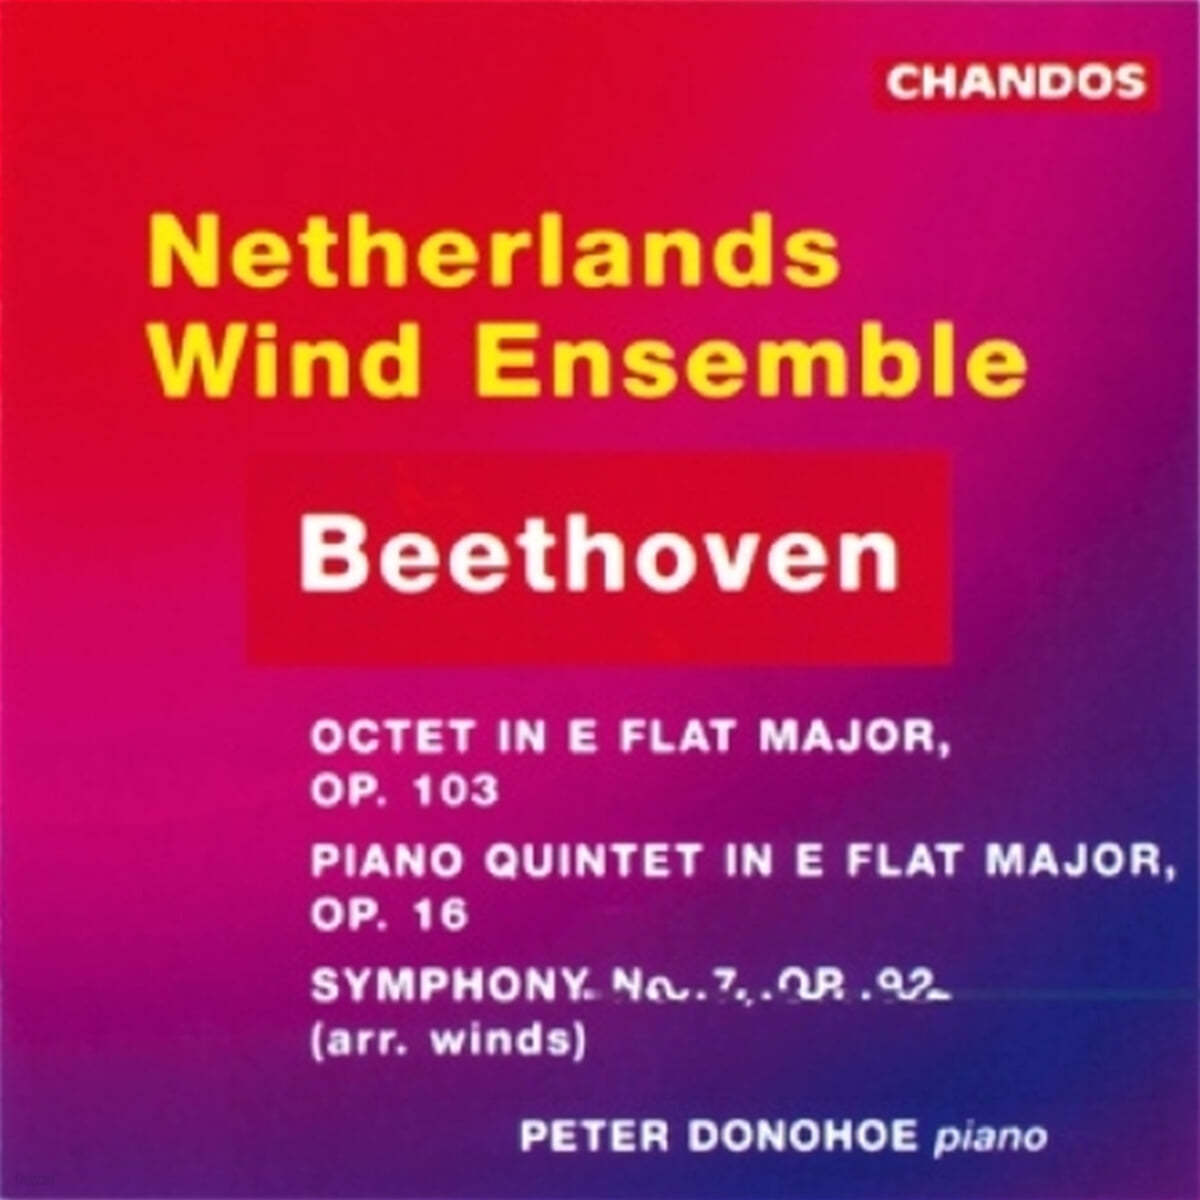 Peter Donohoe 베토벤: 교향곡 7번 [목관 편곡 버전], 오중주, 팔중주 (Beethoven: Symphony Op.92 (arr.Winds), Quintet Op.16, Octet Op.103) 